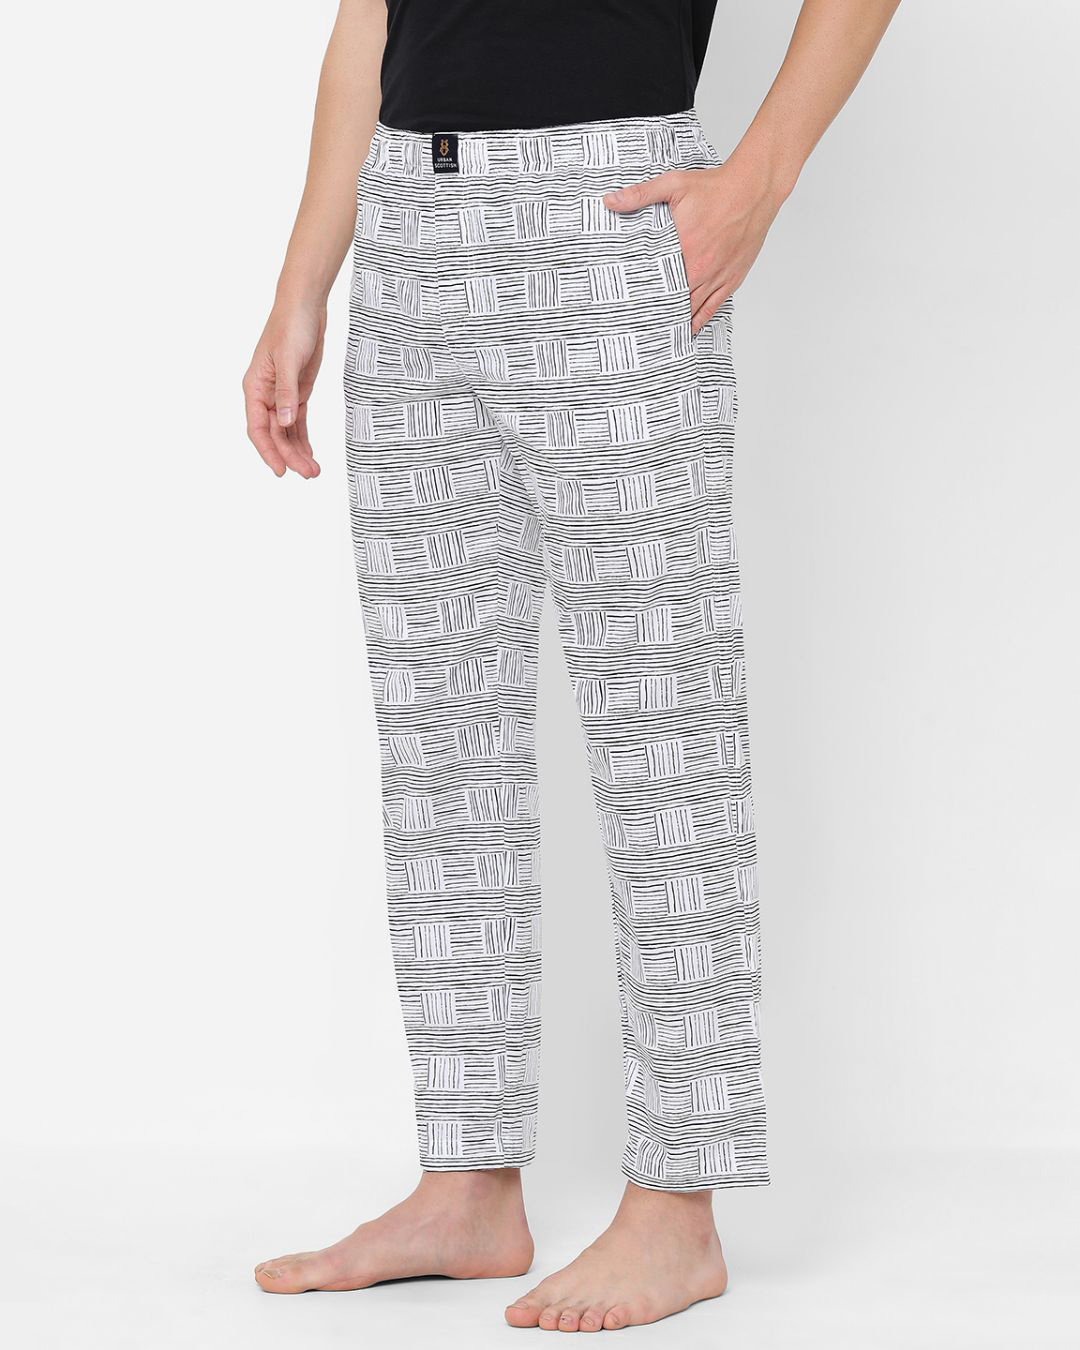 Calvin Klein Logo Mens 100 Cotton Knit Pajama Sleep Pants Black Medium   Amazonin Fashion